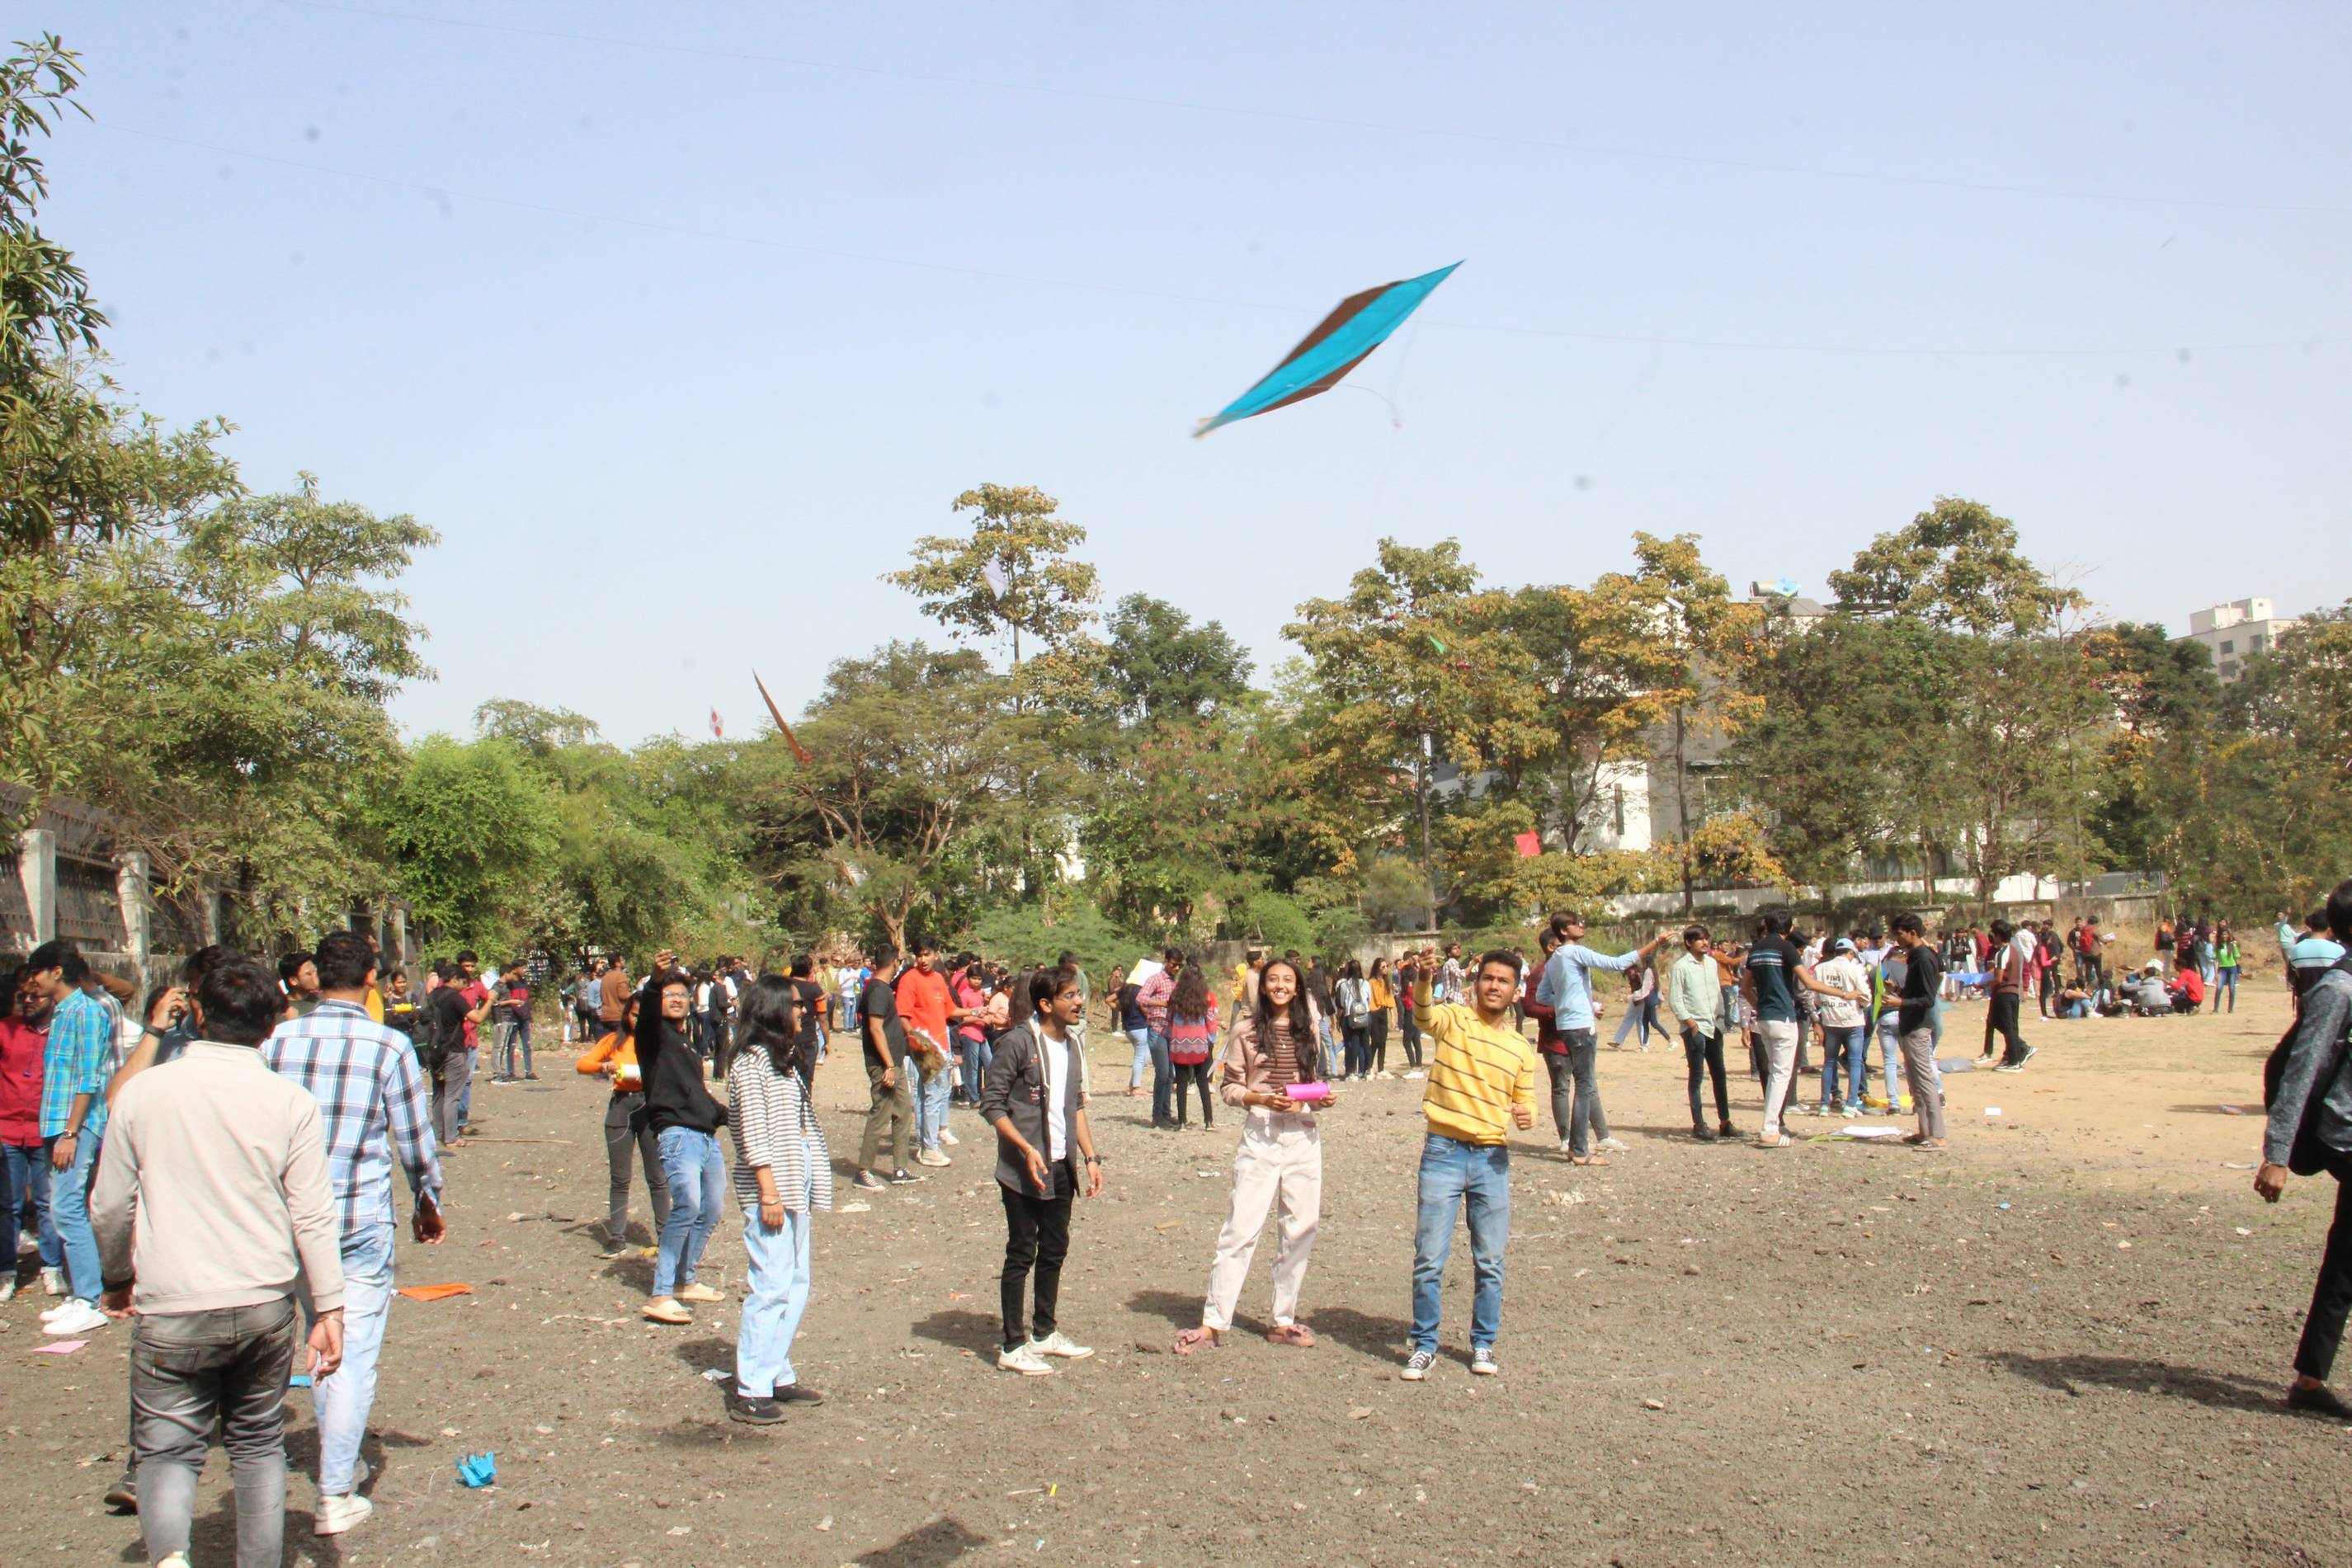 Kite Flying Day is celebrated at SDJ International College, Vesu.